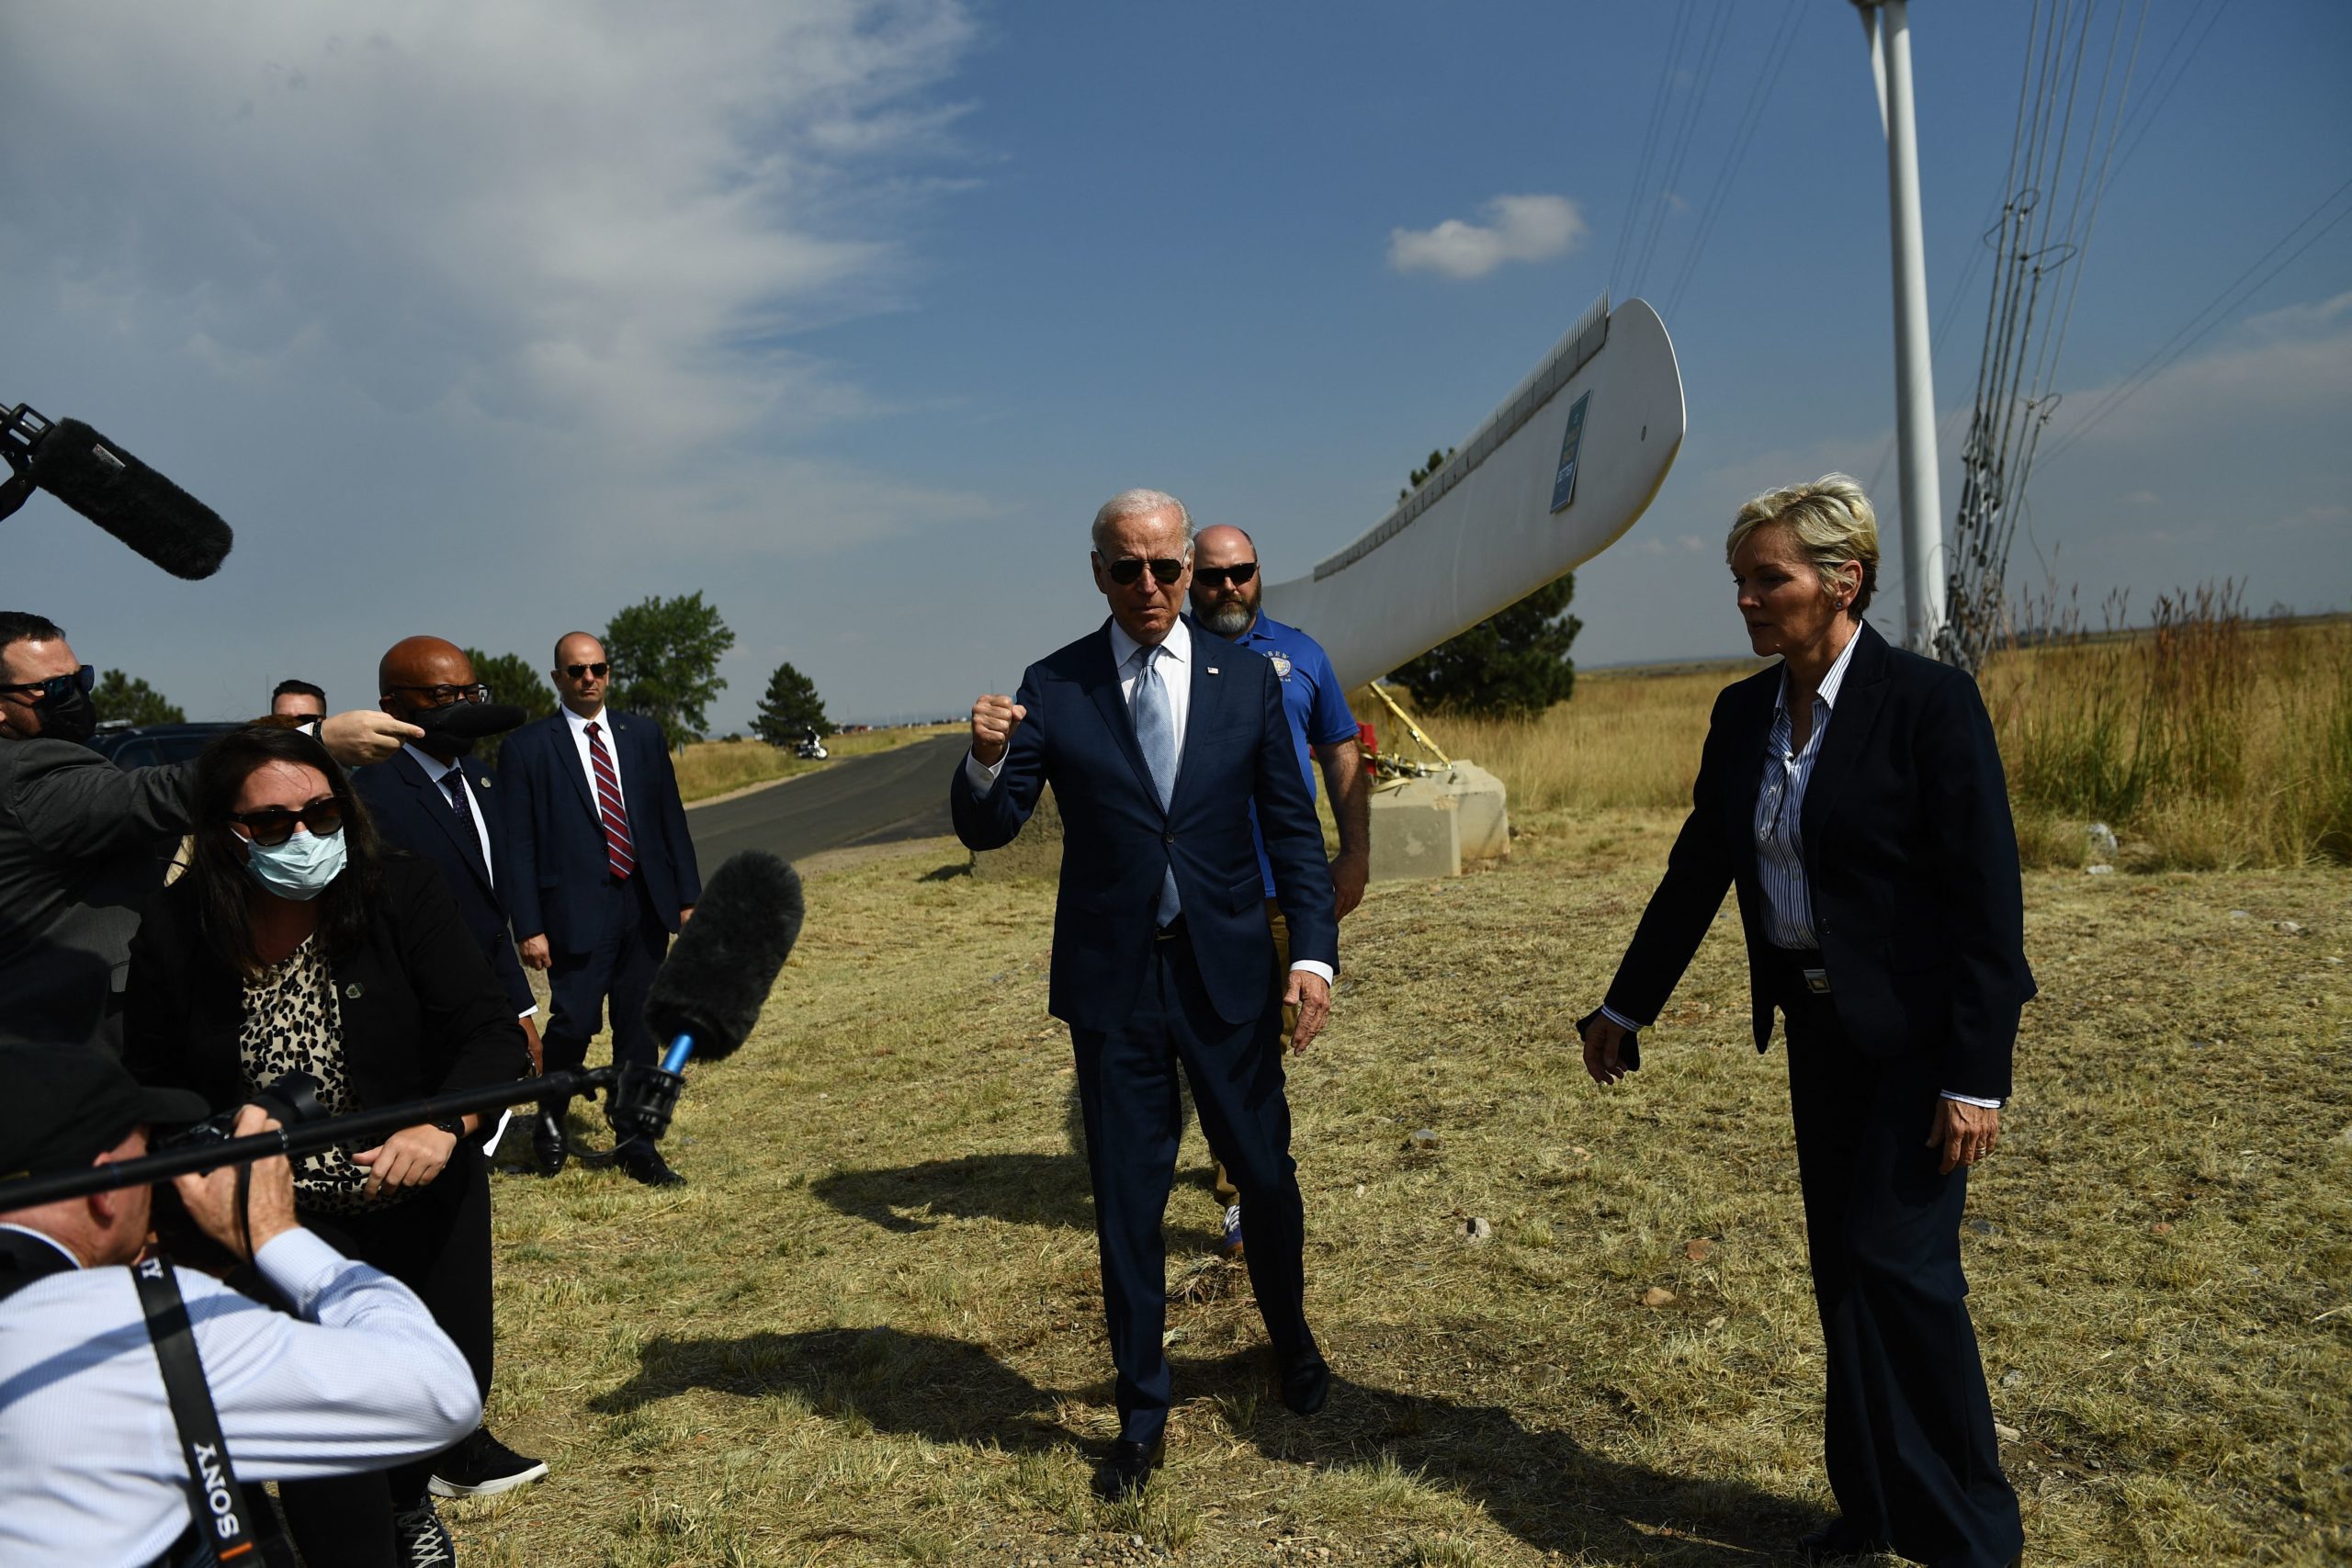 President Joe Biden and Energy Secretary Jennifer Granholm tour the National Renewable Energy Laboratory in Arvada, Colorado, on Sept. 14, 2021. (Brendan Smialowski/AFP via Getty Images)